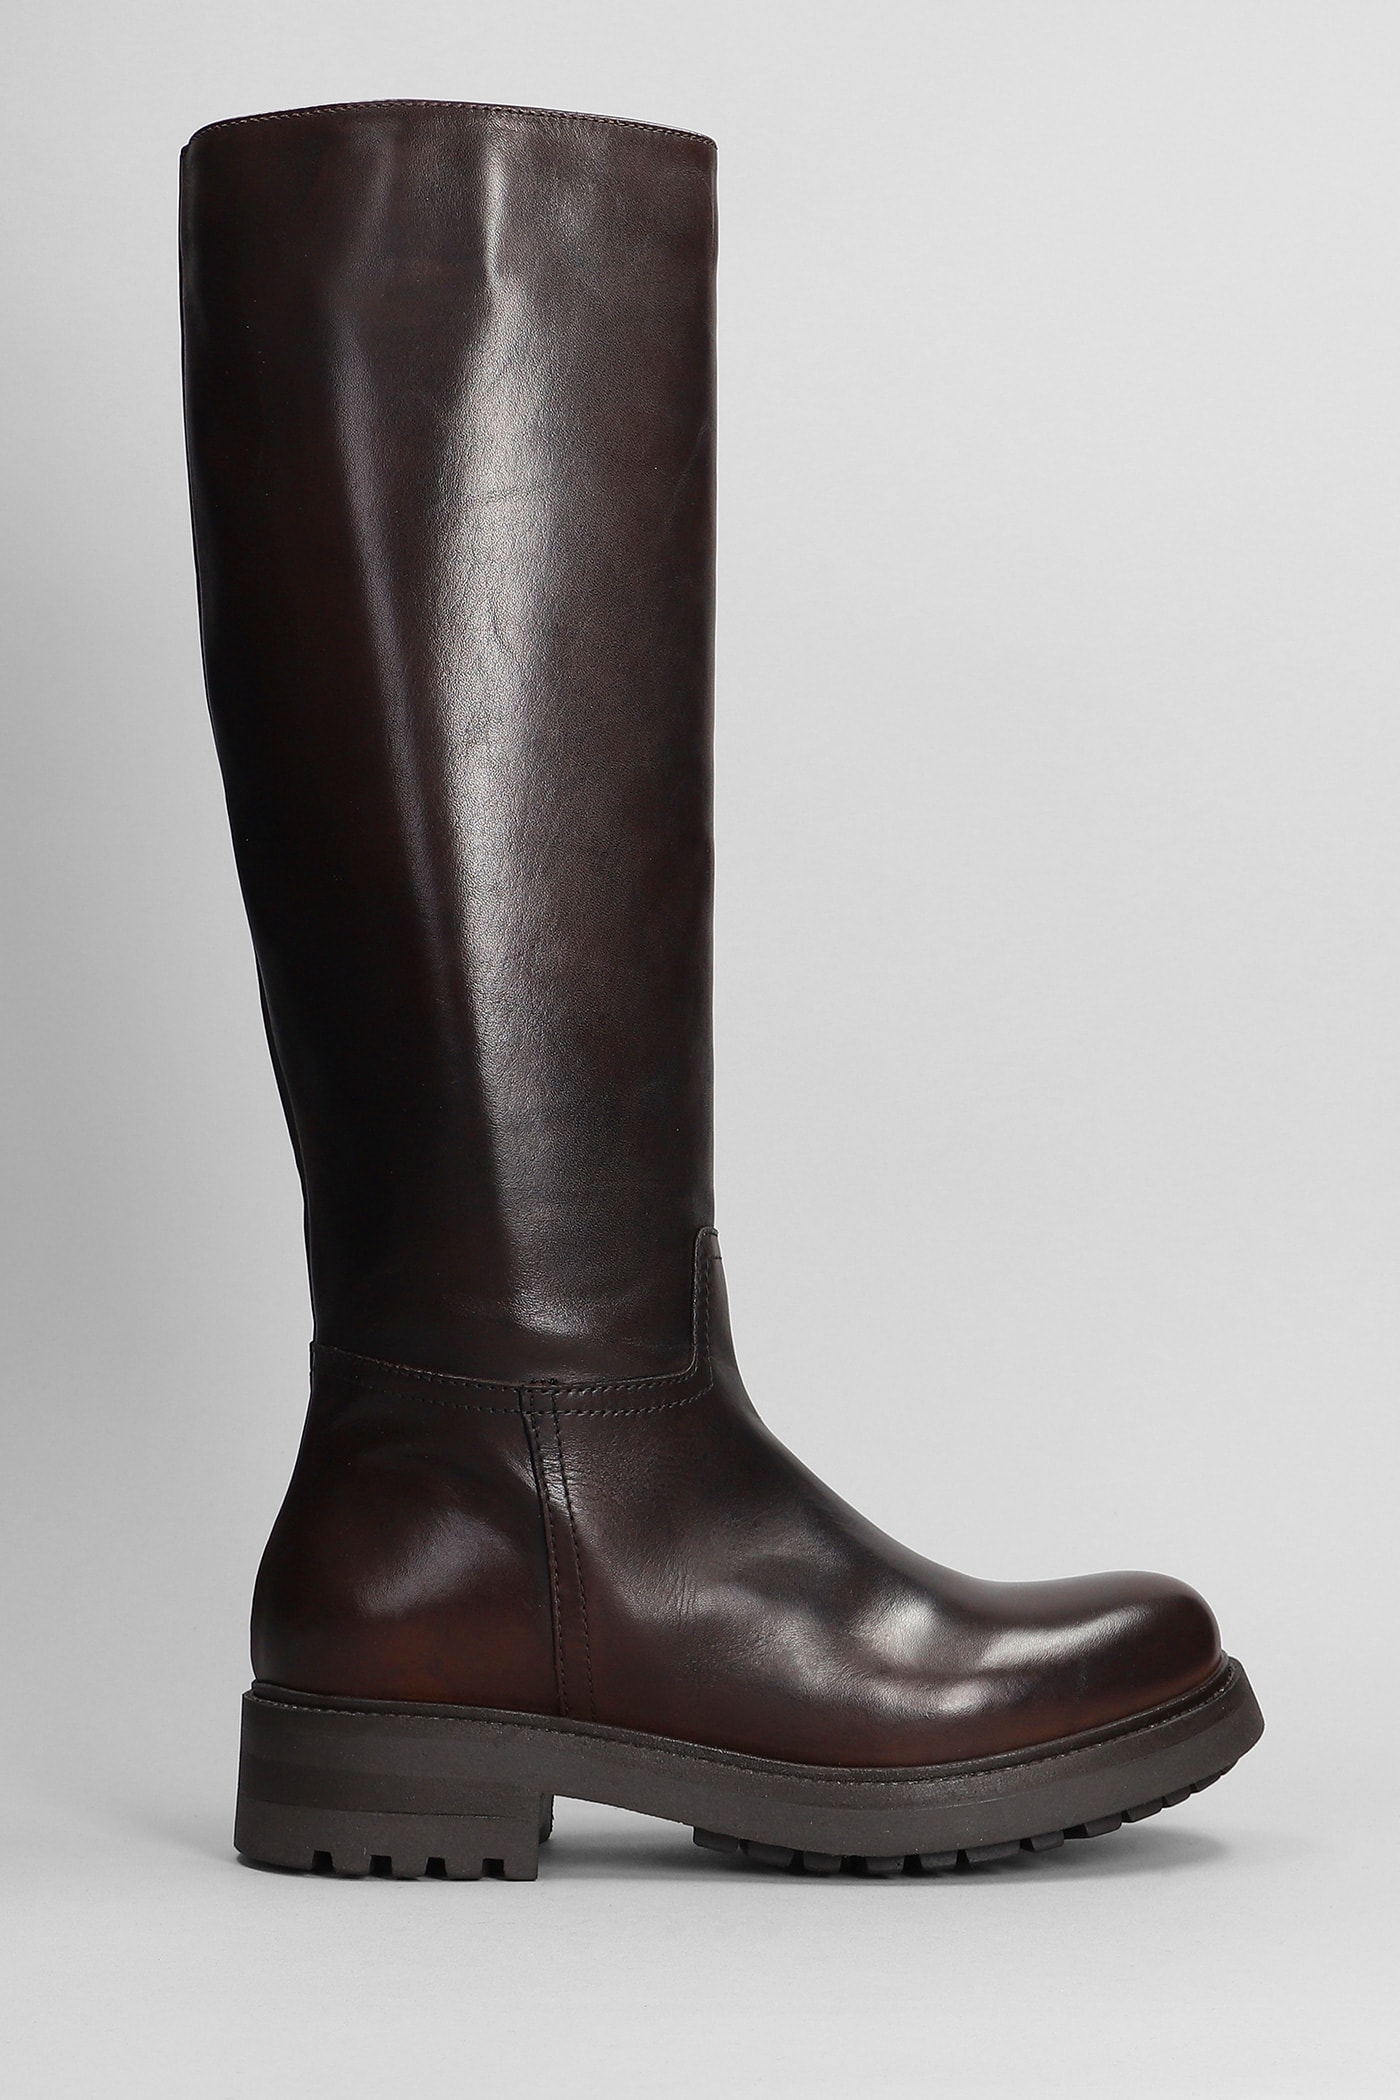 Low Heels Boots In Dark Brown Leather